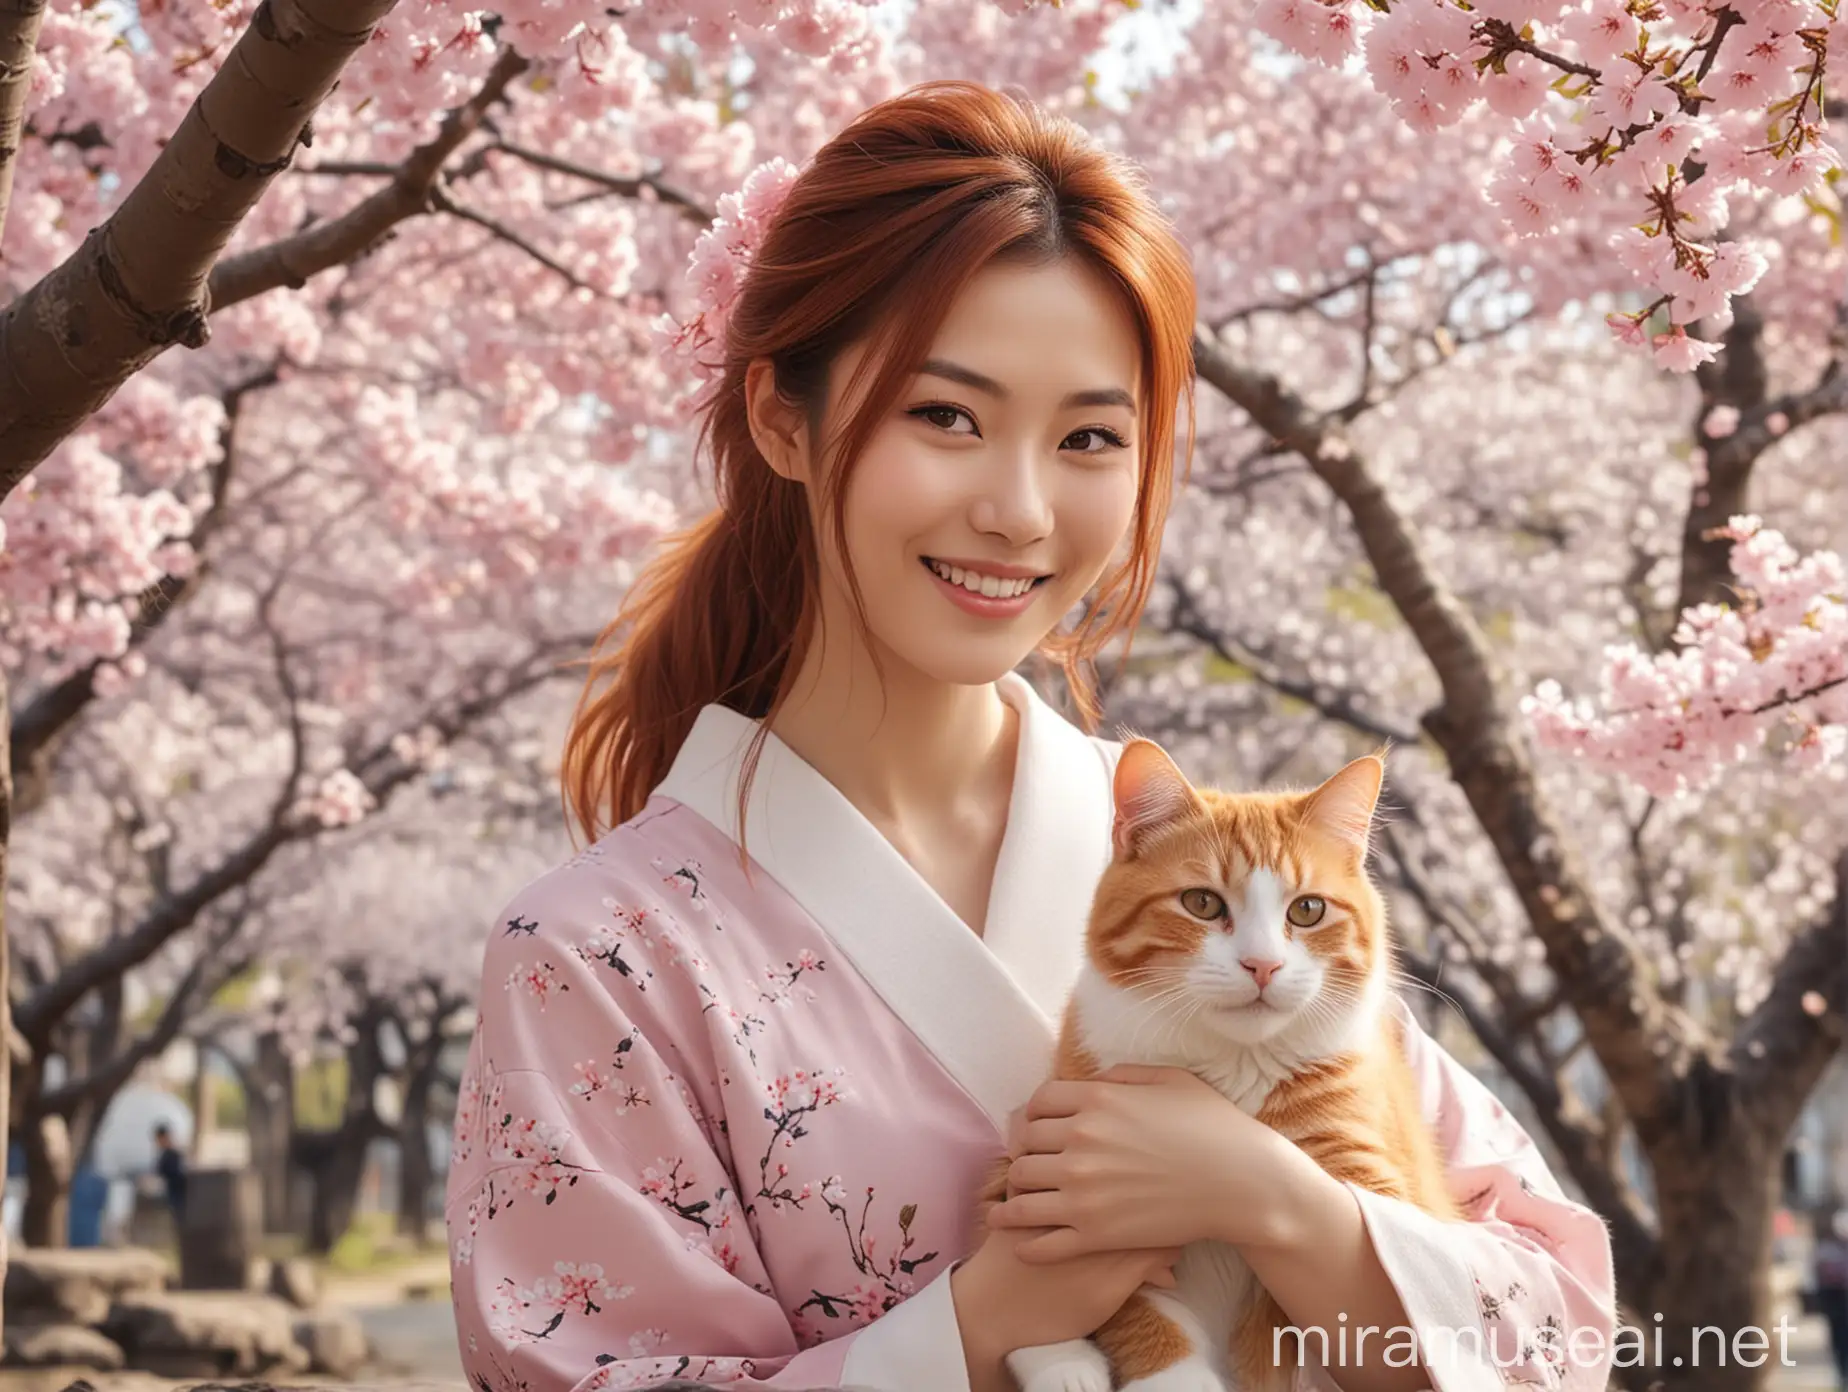 Japanese Woman Smiling with Cute Ginger Cat under Sakura Tree